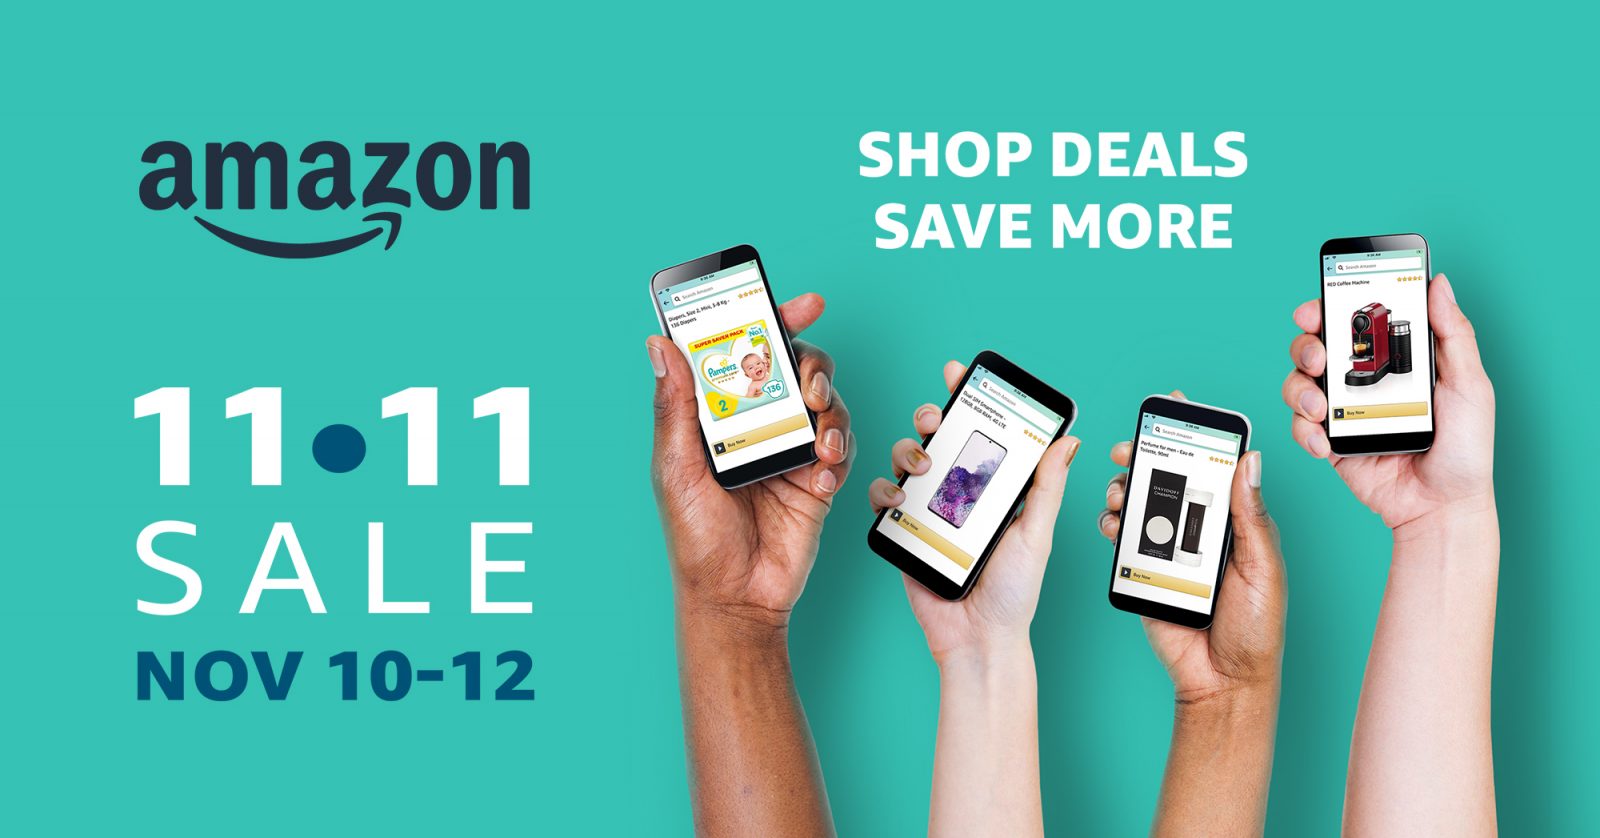 Amazon.ae unveils sales deals for November 11